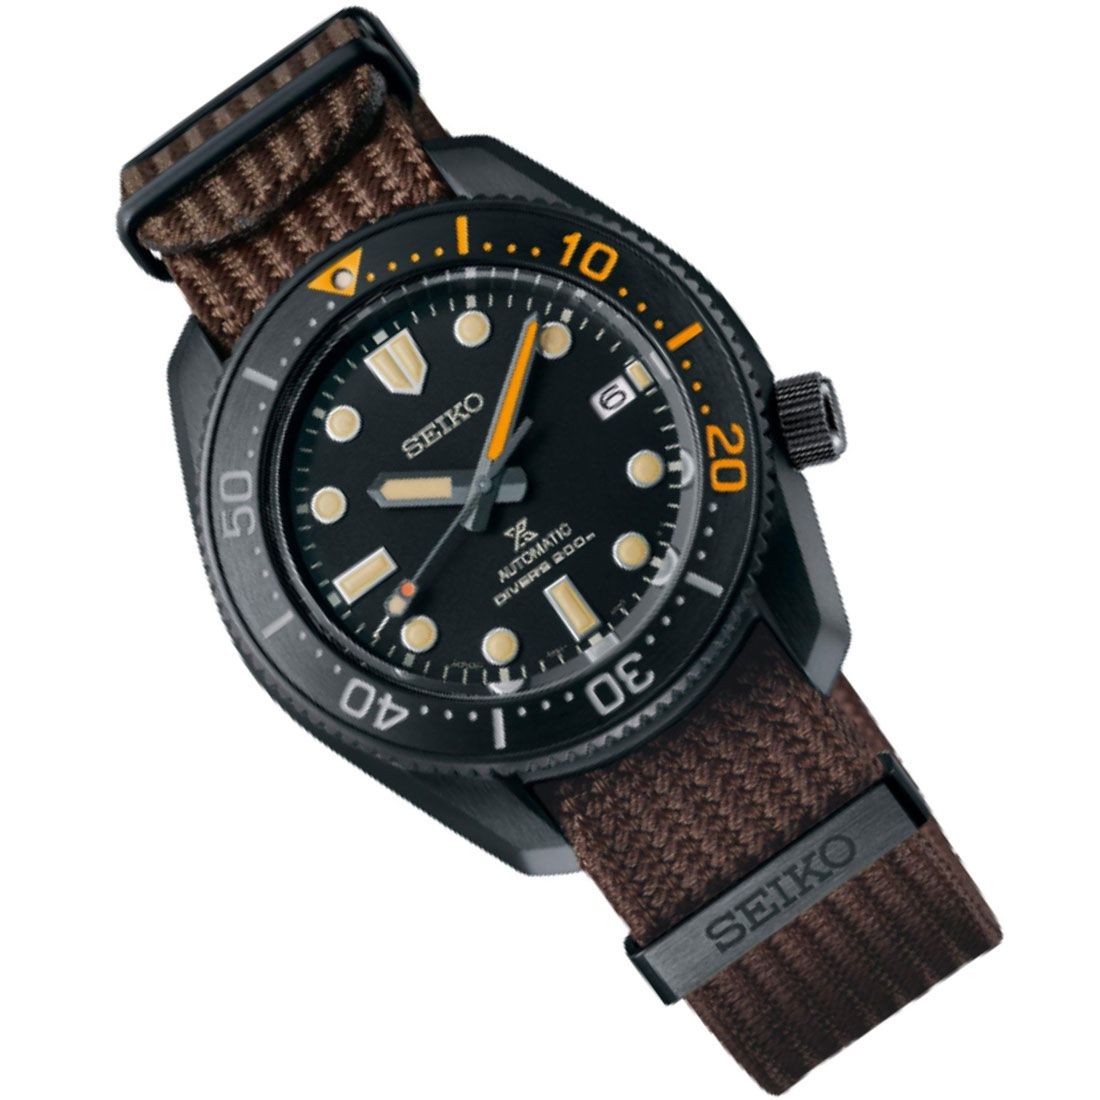 Seiko 1968 Japan Made Gen 2 Baby Marinemaster Black Series Limited Edition Men's Seichu Strap Watch SPB255J1